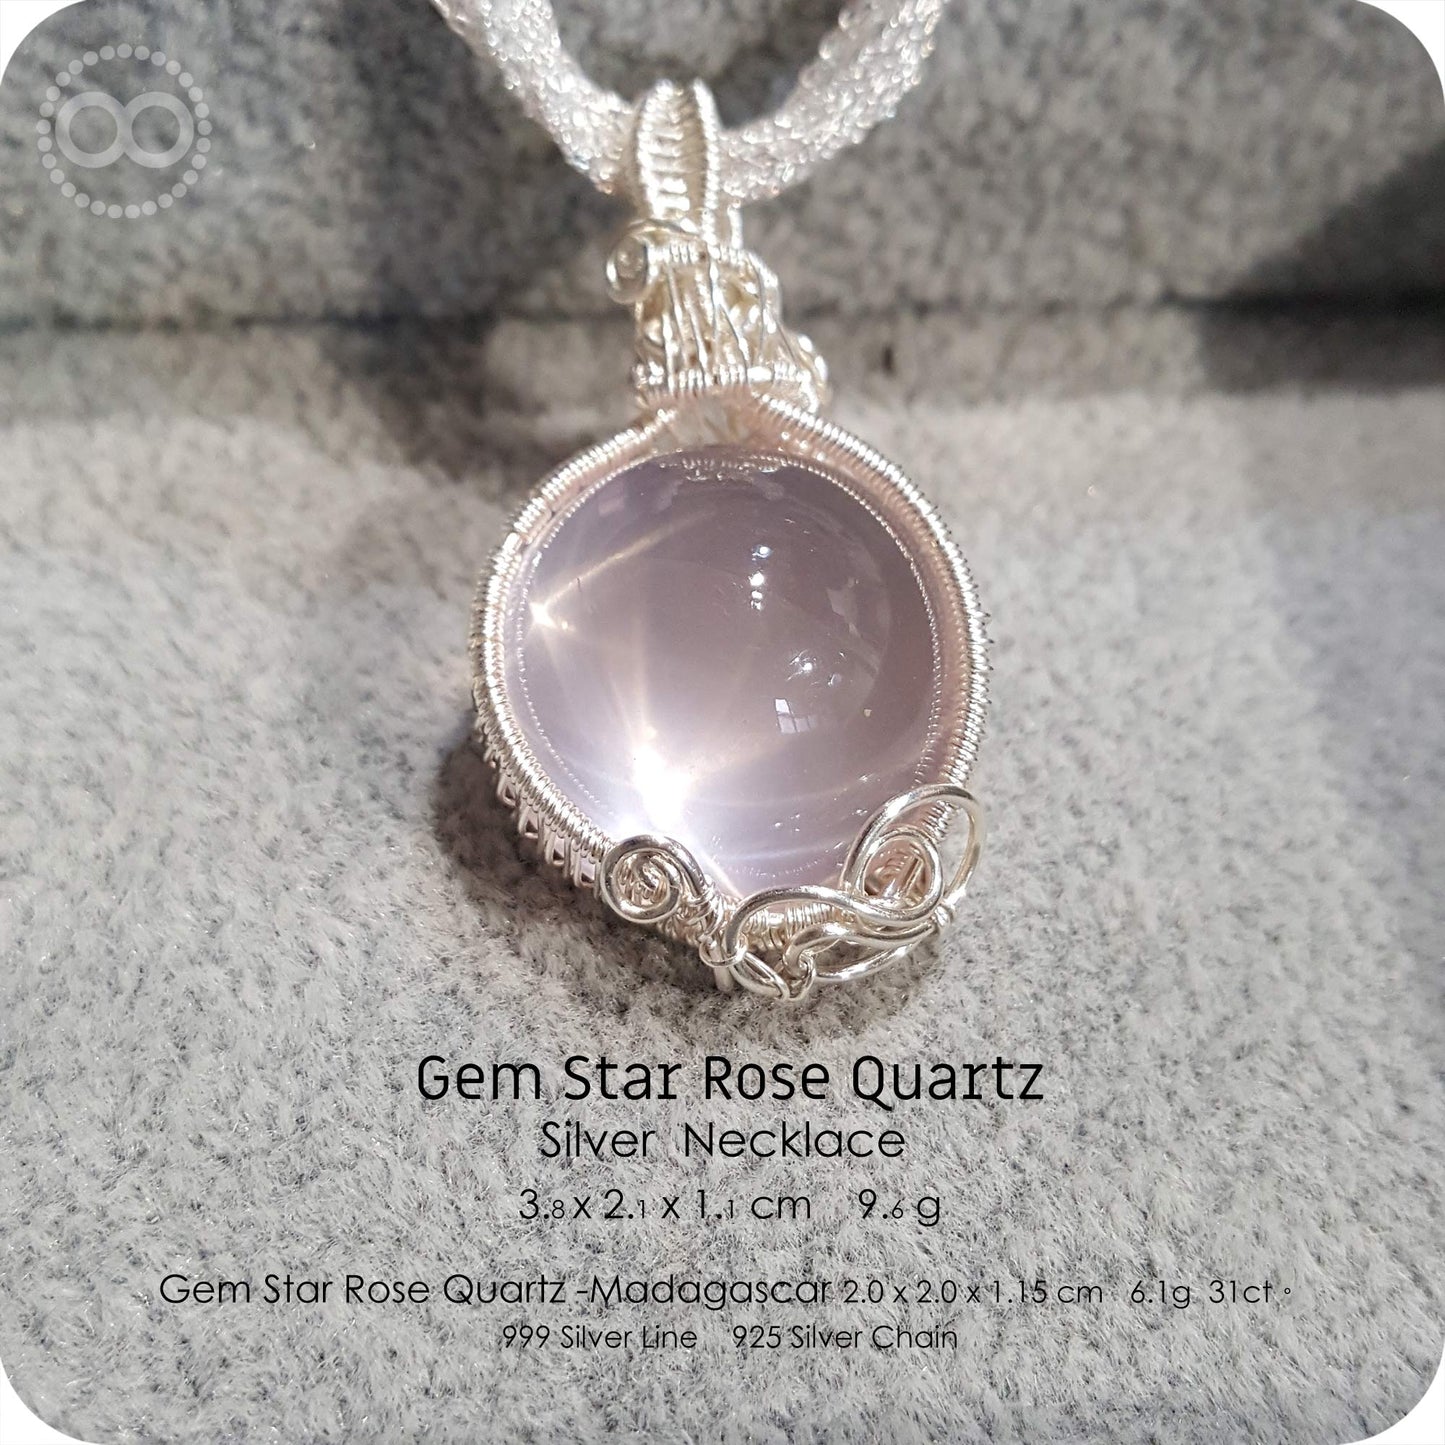 Gem Star Rose Quartz 果凍星光粉晶寶石 Silver Necklace - H212